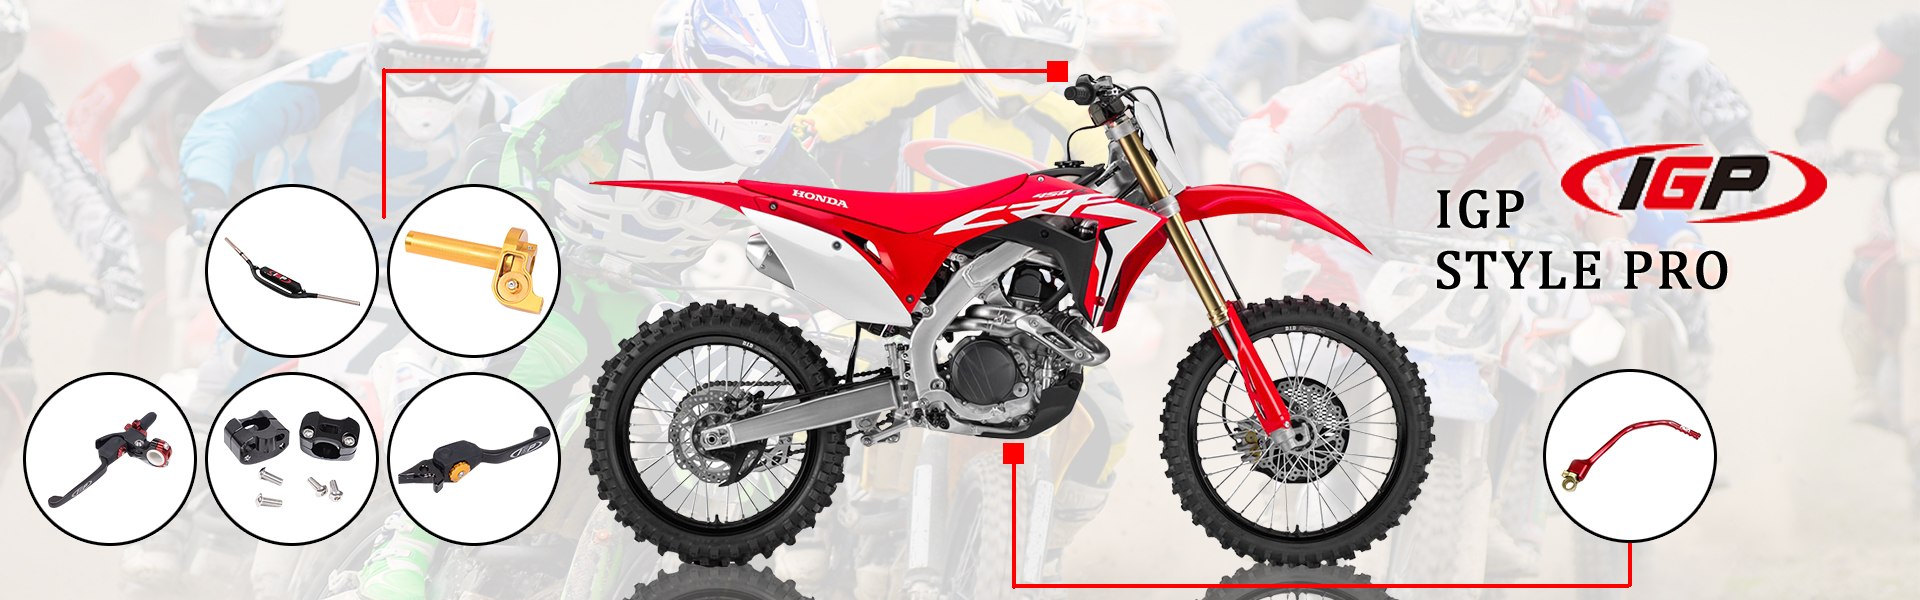 ad1_IGP-Motor_Dirt Bike Handlebar_Dirt Bike Brake Lever_Dirt Bike Clutch Lever